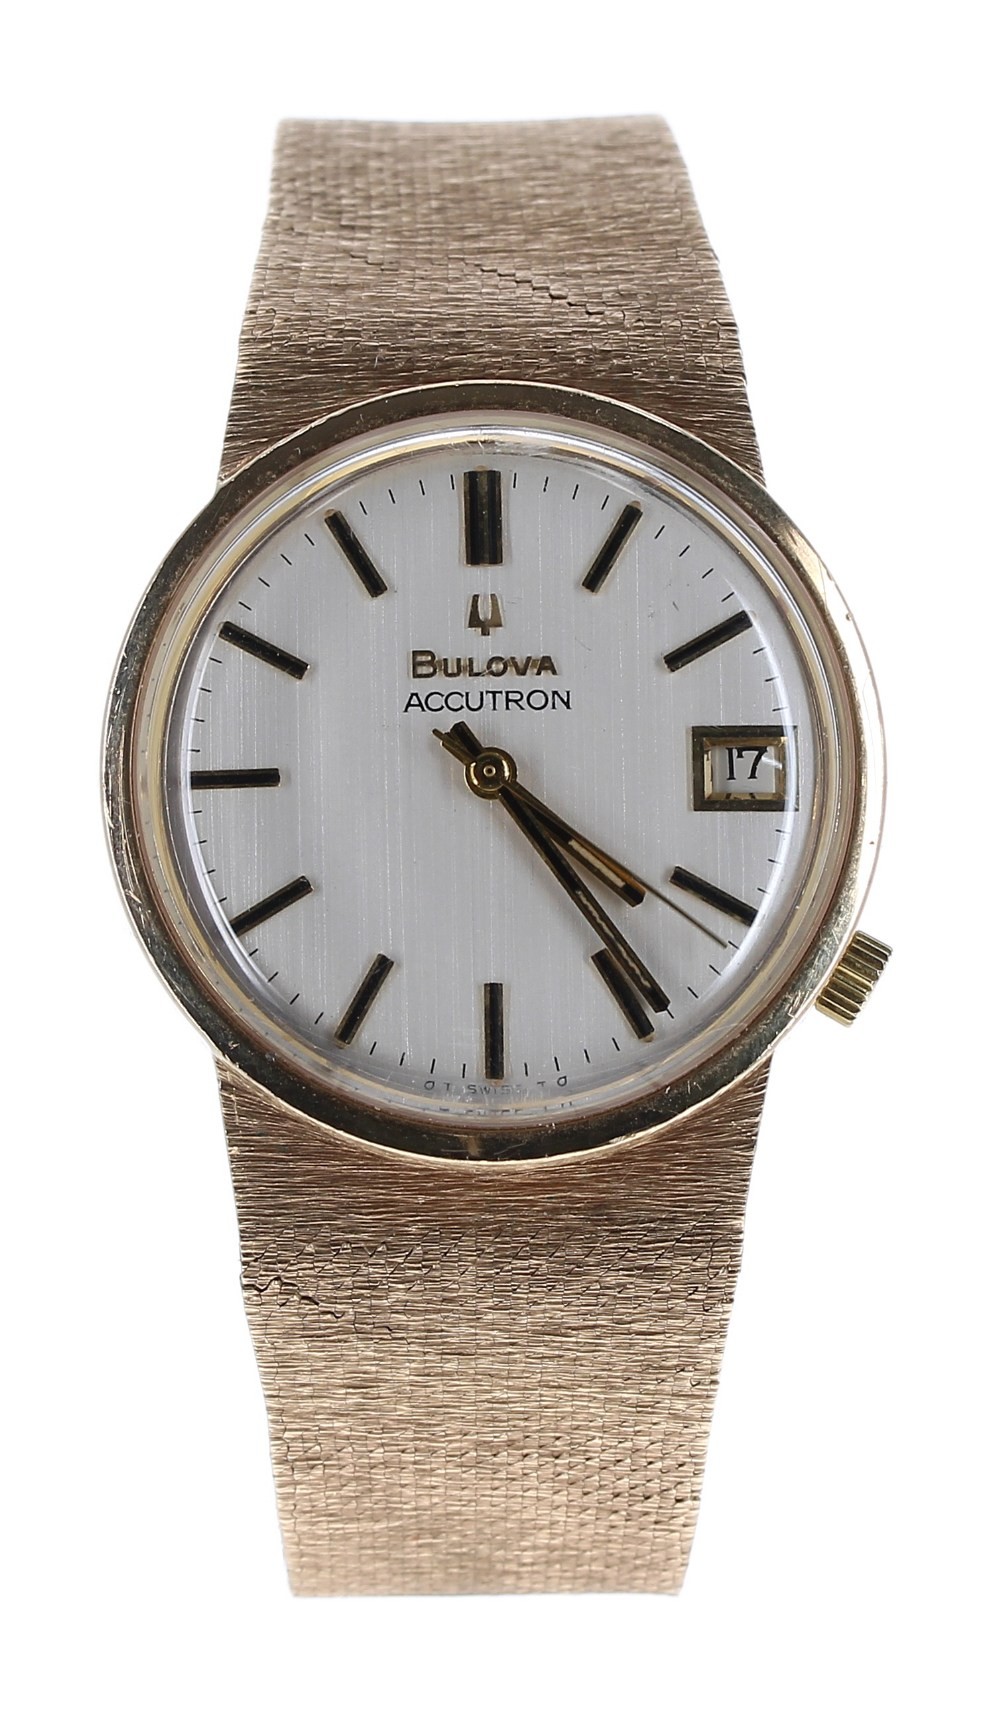 Bulova Accutron 9ct gentleman's bracelet watch, ref. 888-3, import hallmark for London 1973,